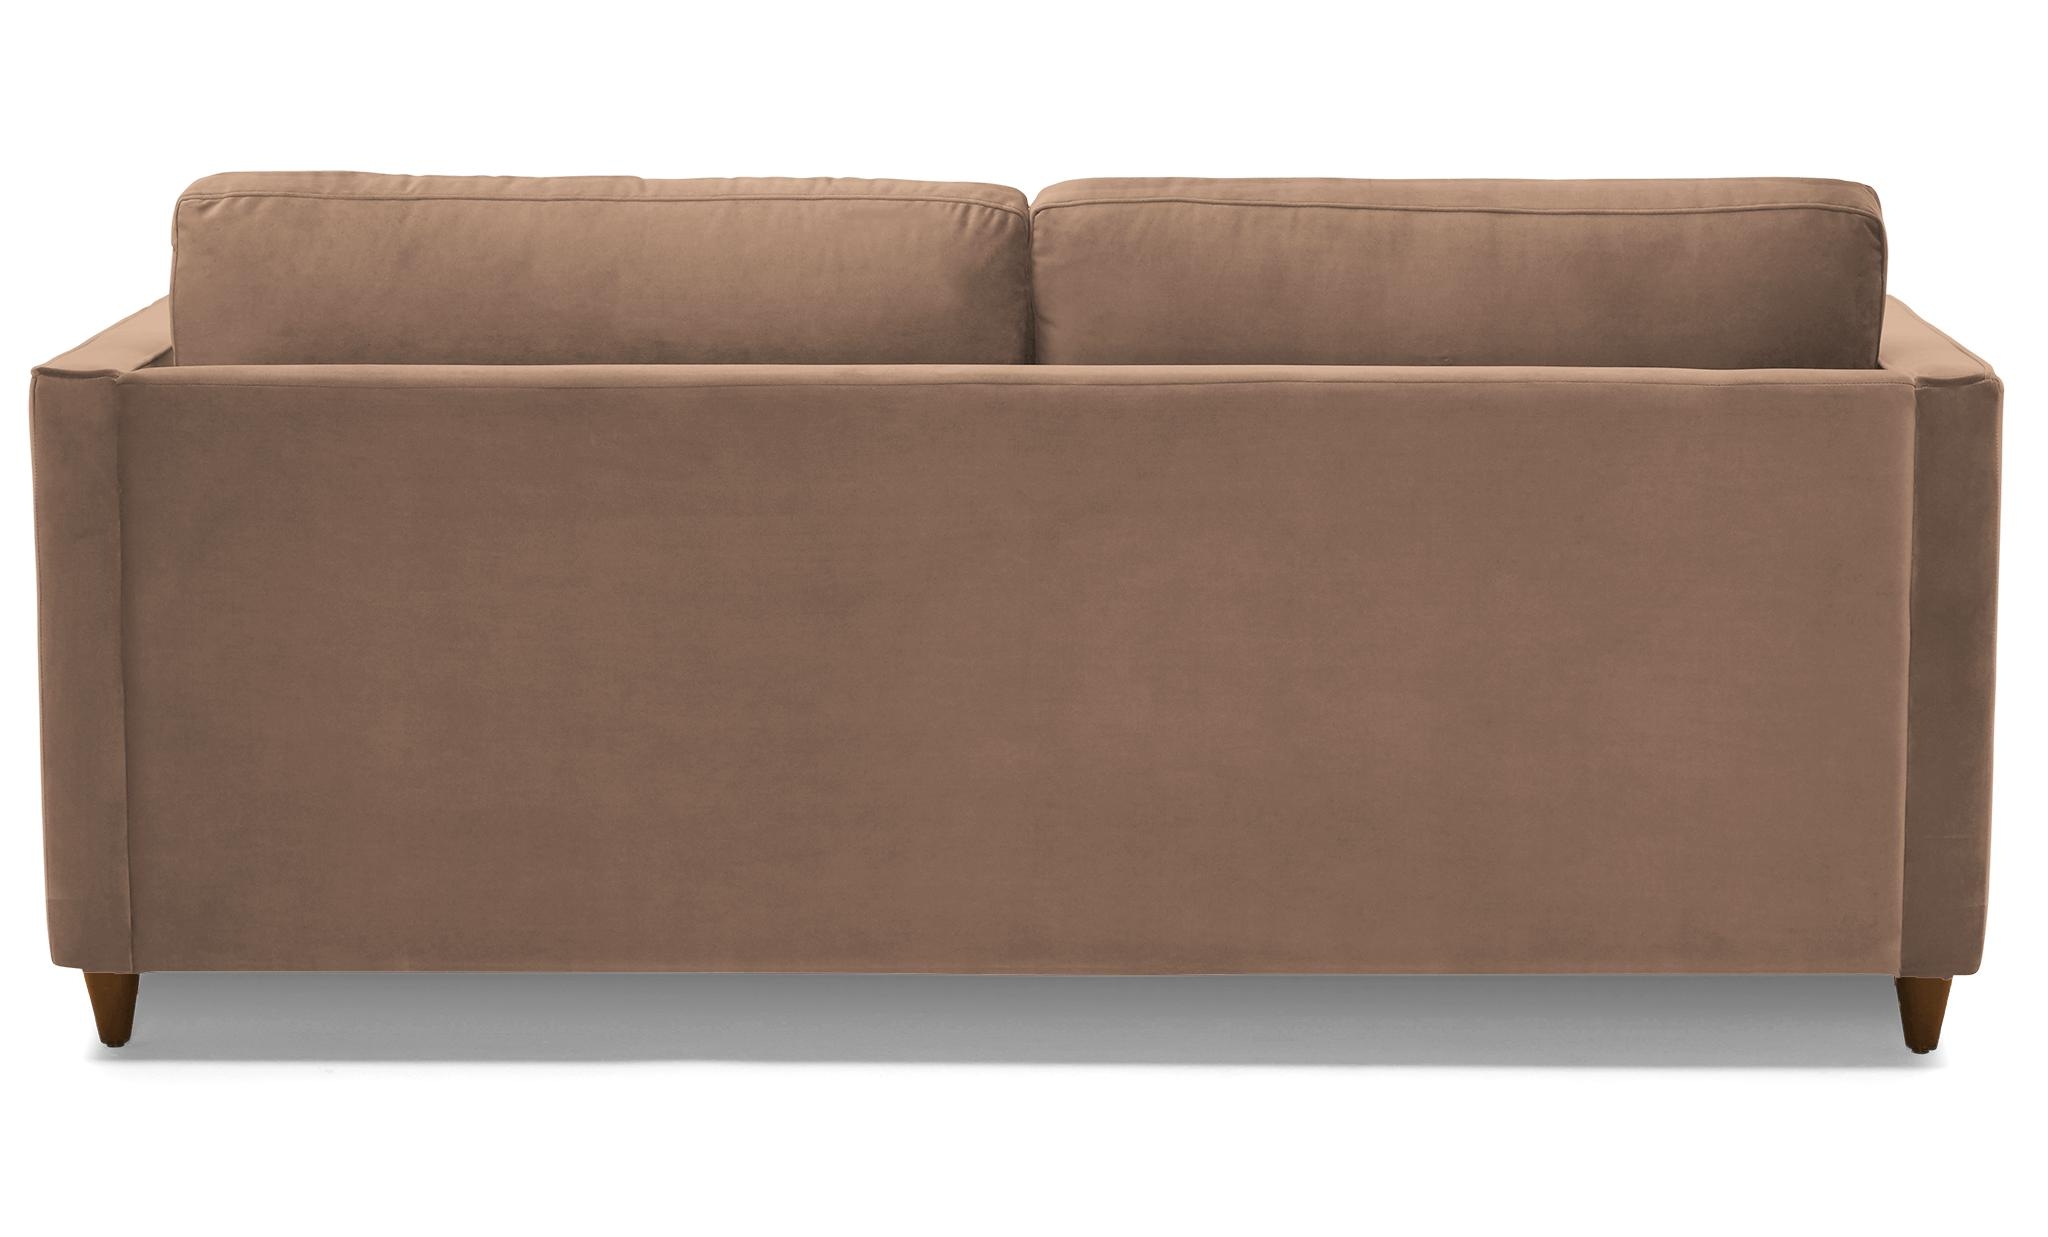 Pink Briar Mid Century Modern Sleeper Sofa - Royale Blush - Mocha - Image 4